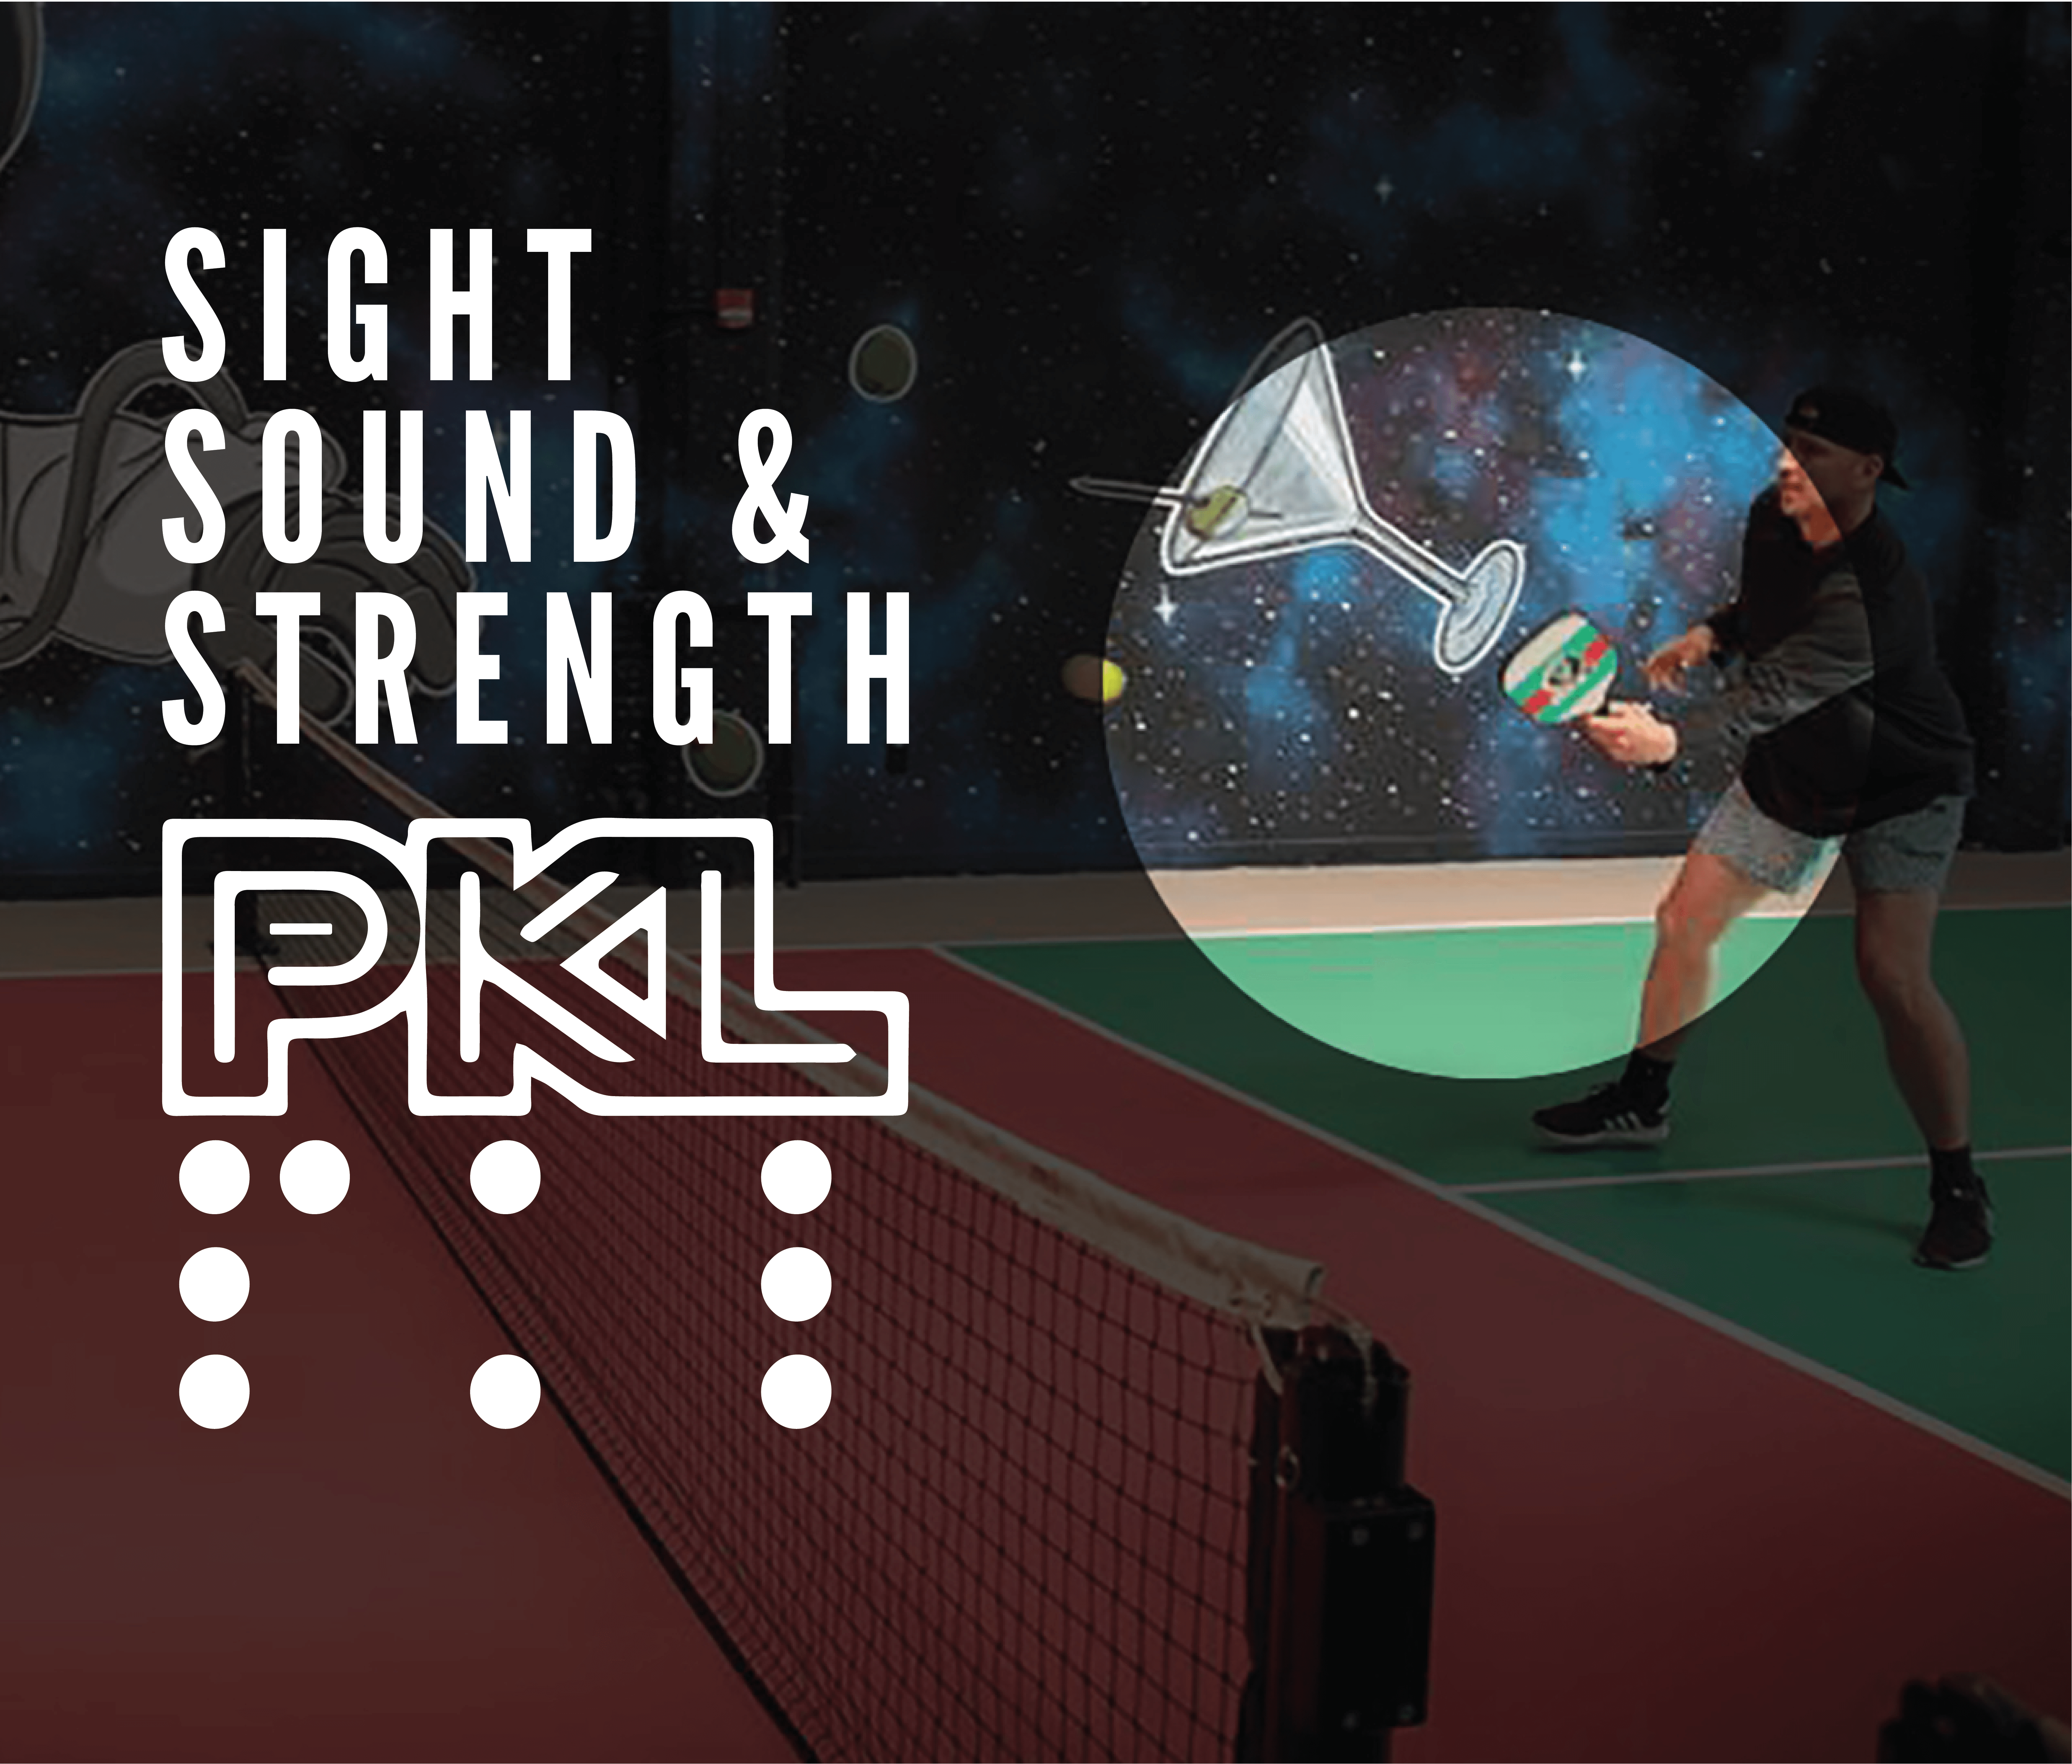 Sight Sound Strength PKL Boston